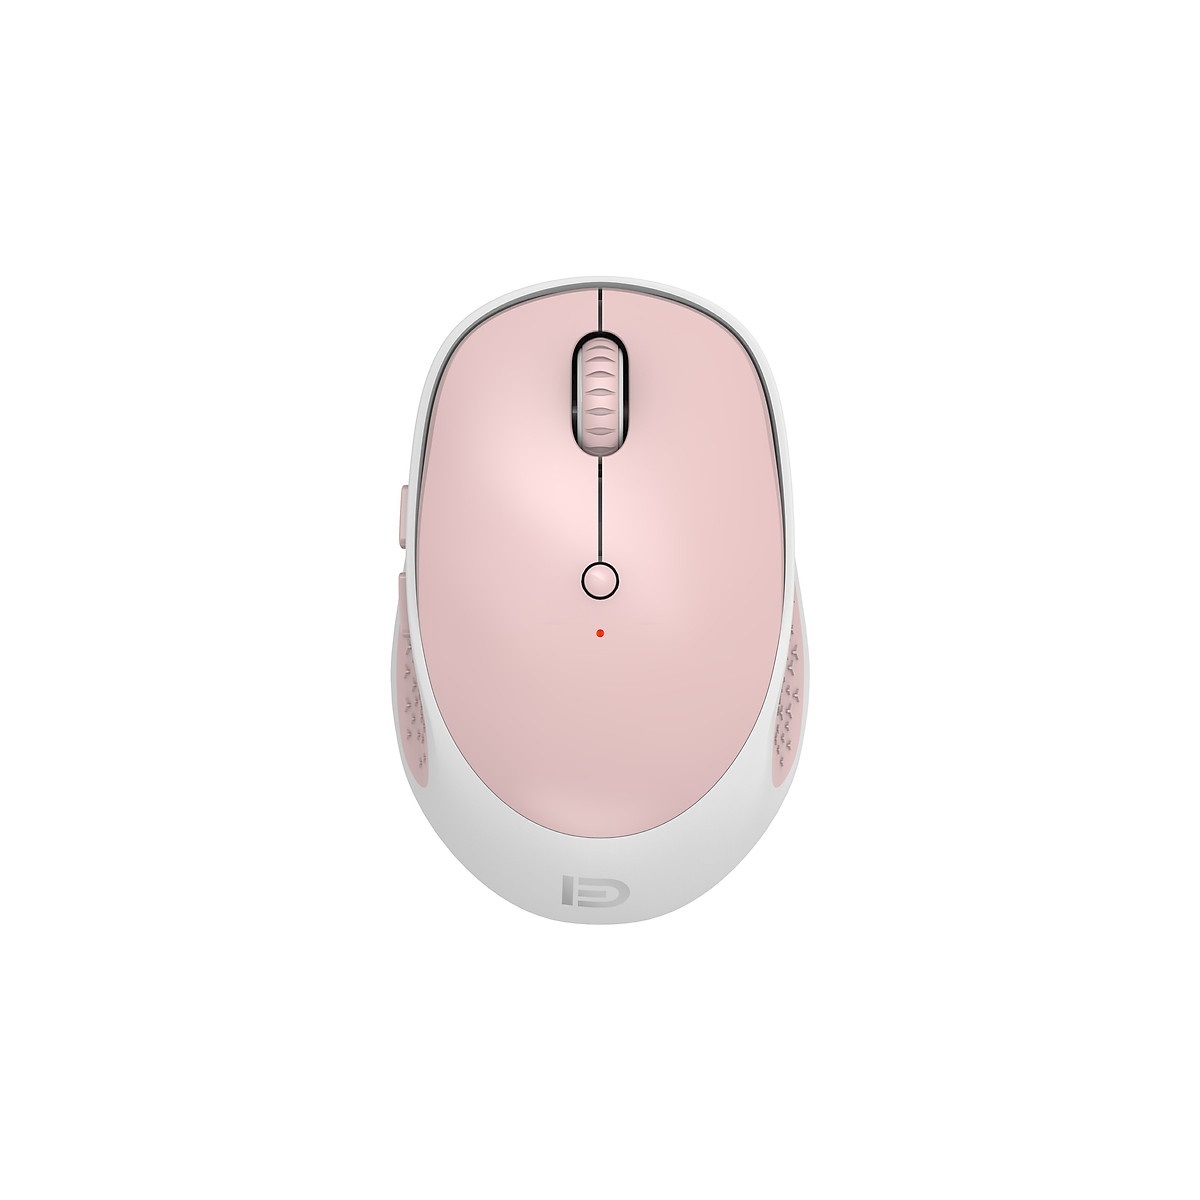 Chuột máy tính - Mouse FD E580